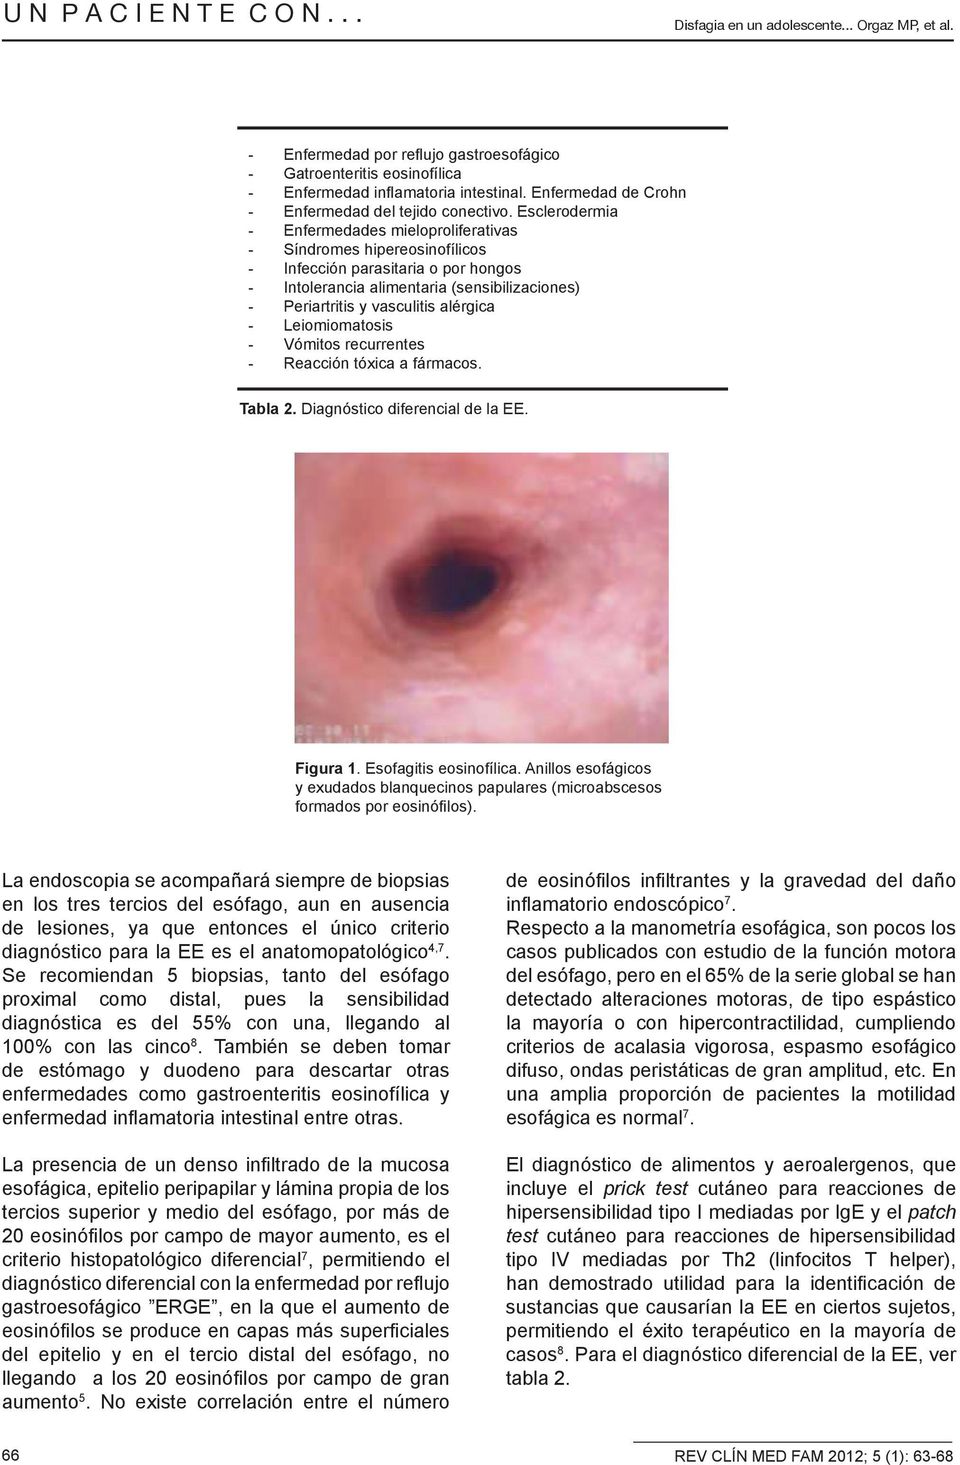 alérgica - Leiomiomatosis - Vómitos recurrentes - Reacción tóxica a fármacos. Tabla 2. Diagnóstico diferencial de la EE. Figura 1. Esofagitis eosinofílica.